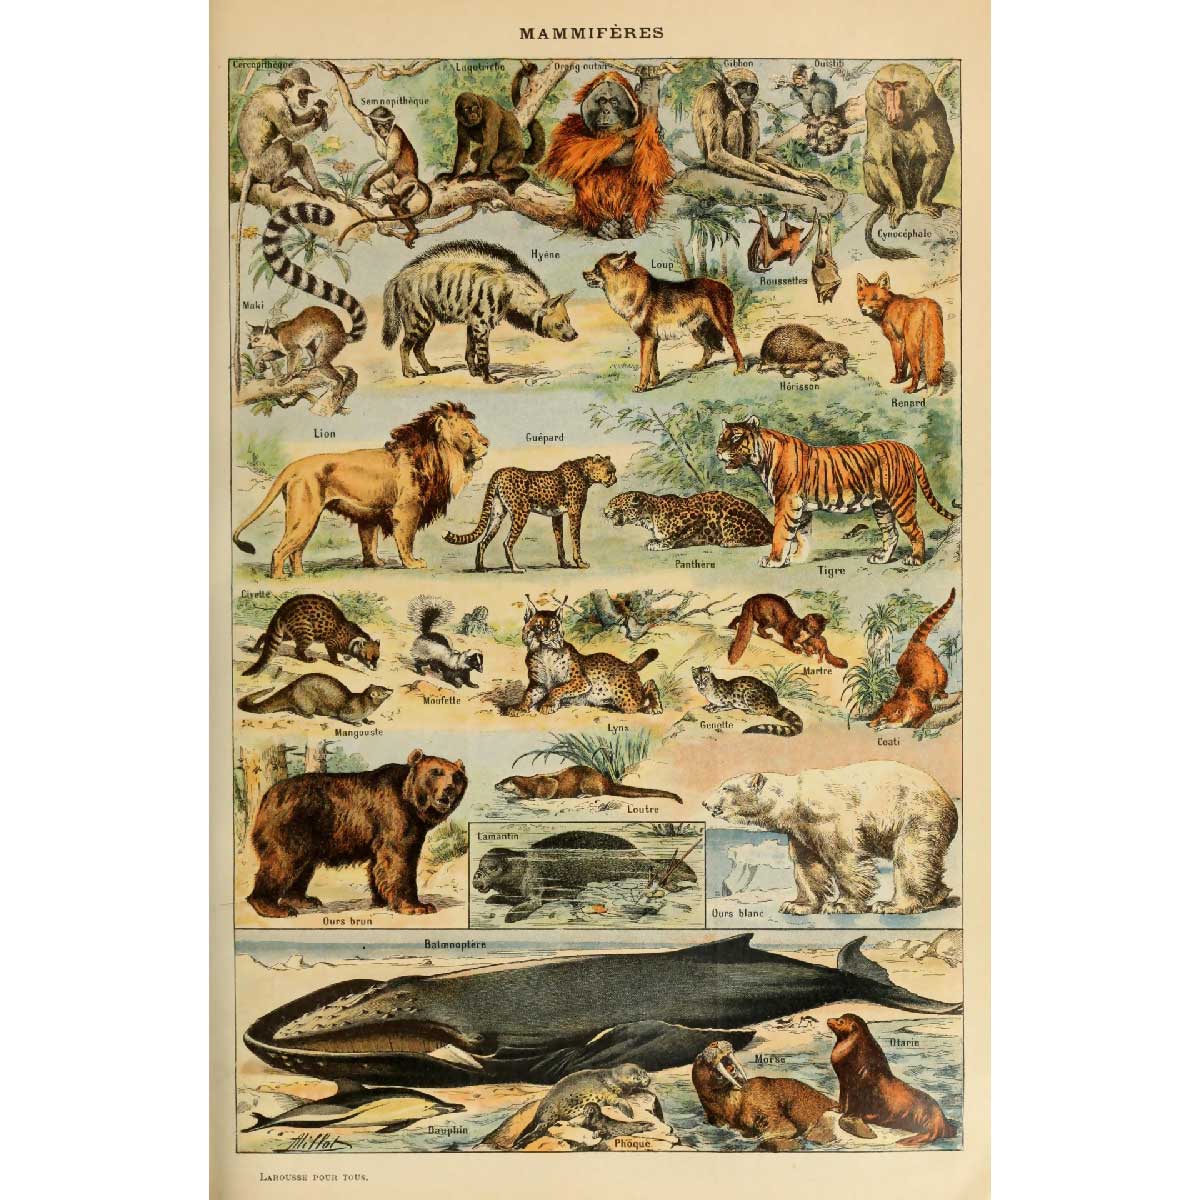 drawings of wildlife mammals. vintage-style